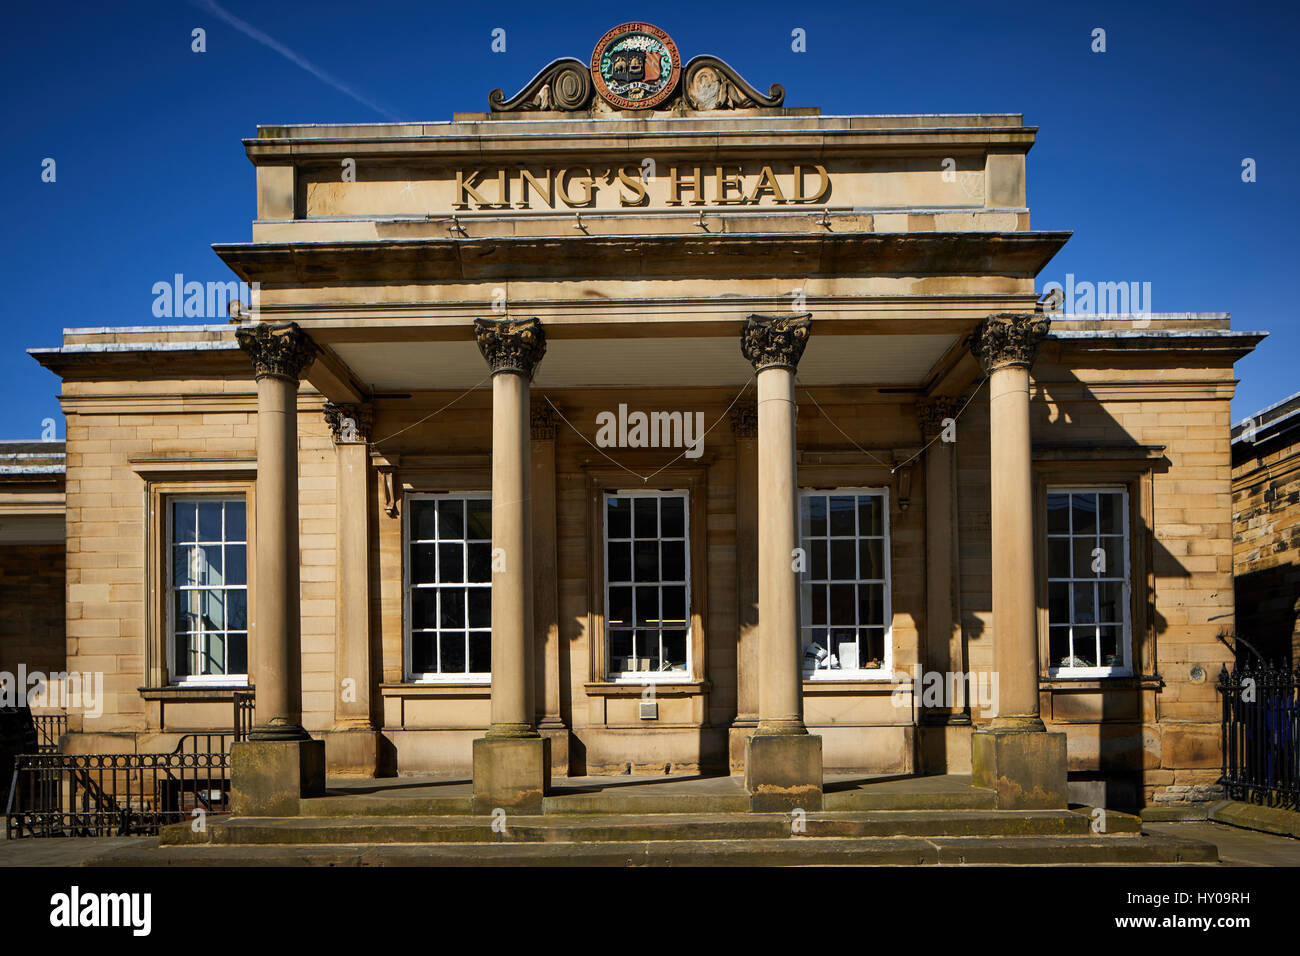 Kings head Pub, Huddersfield town centre a large market town metropolitan borough Kirklees, West Yorkshire, England. UK. Stock Photo